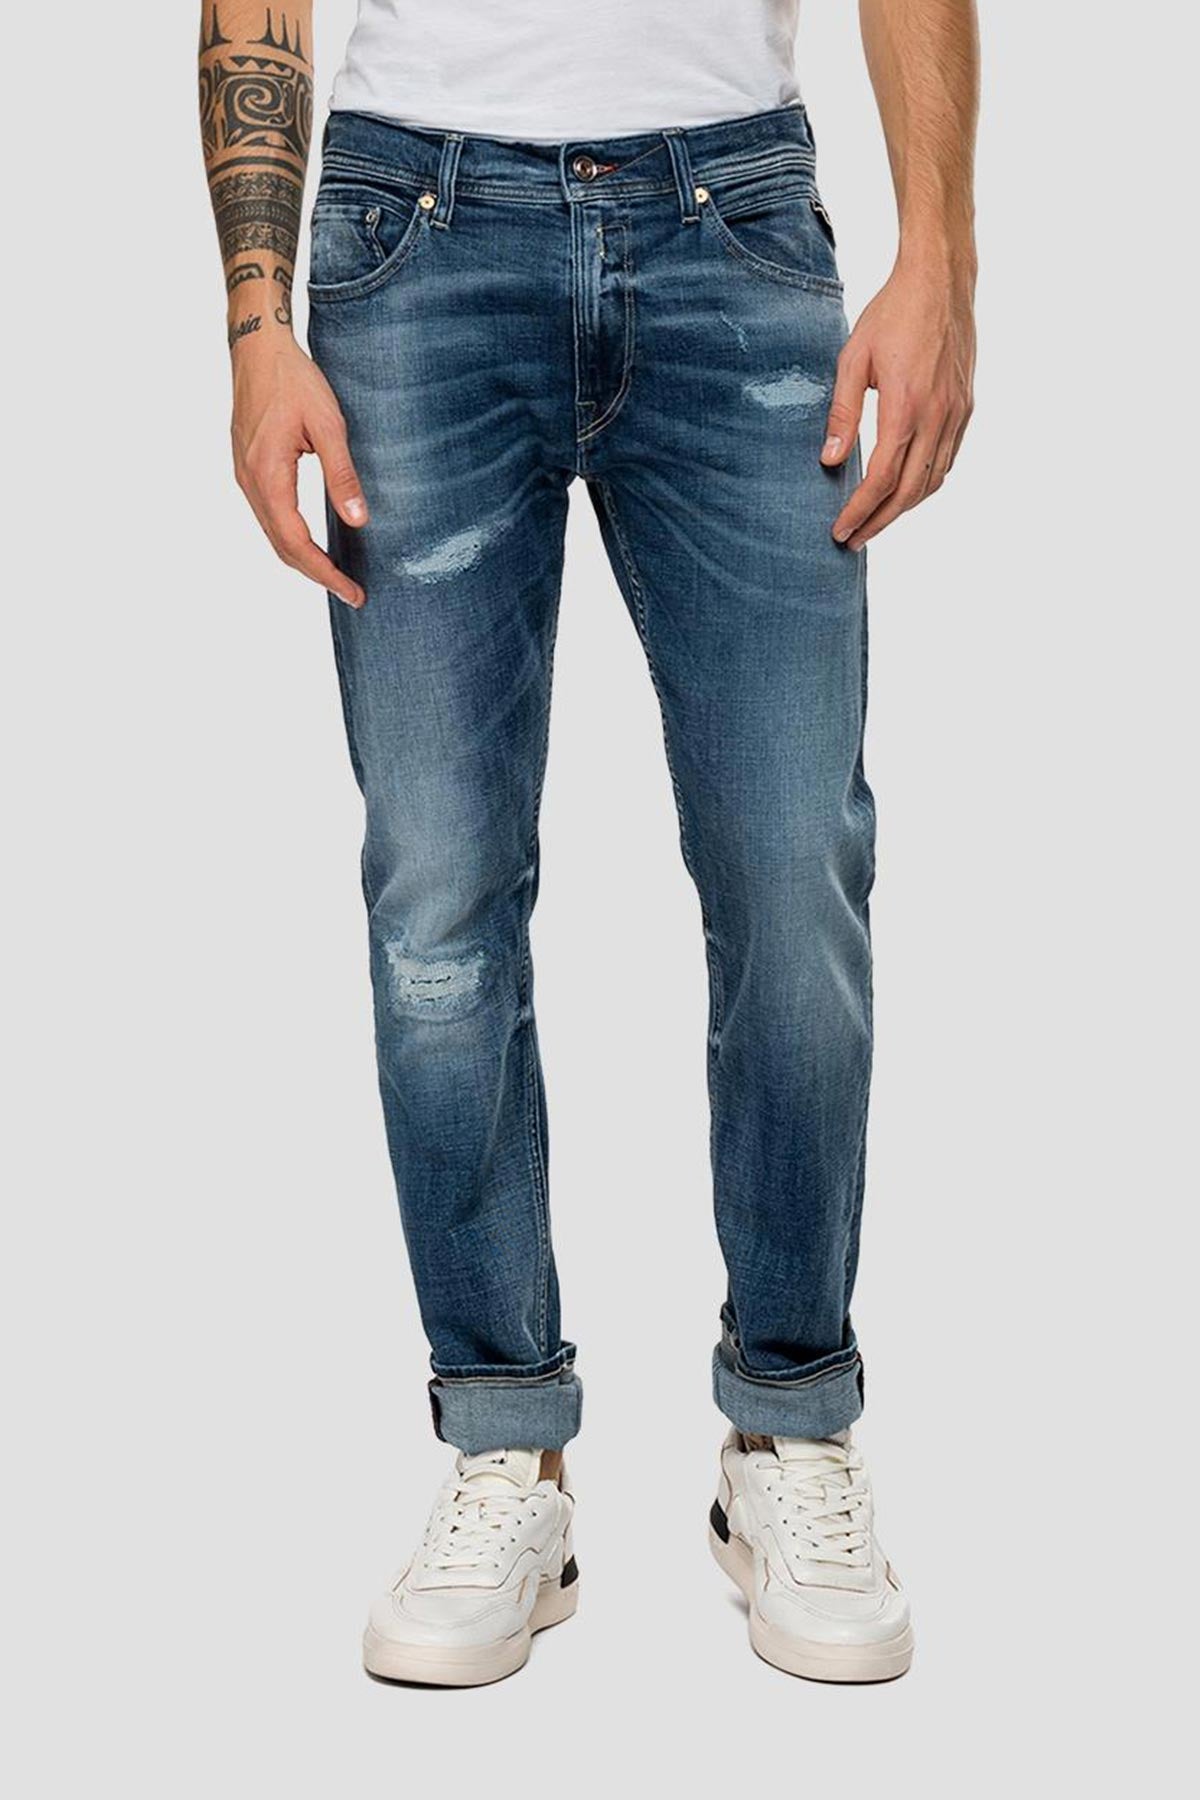 Replay Skinny Fit Jondrill Jeans-Libas Trendy Fashion Store